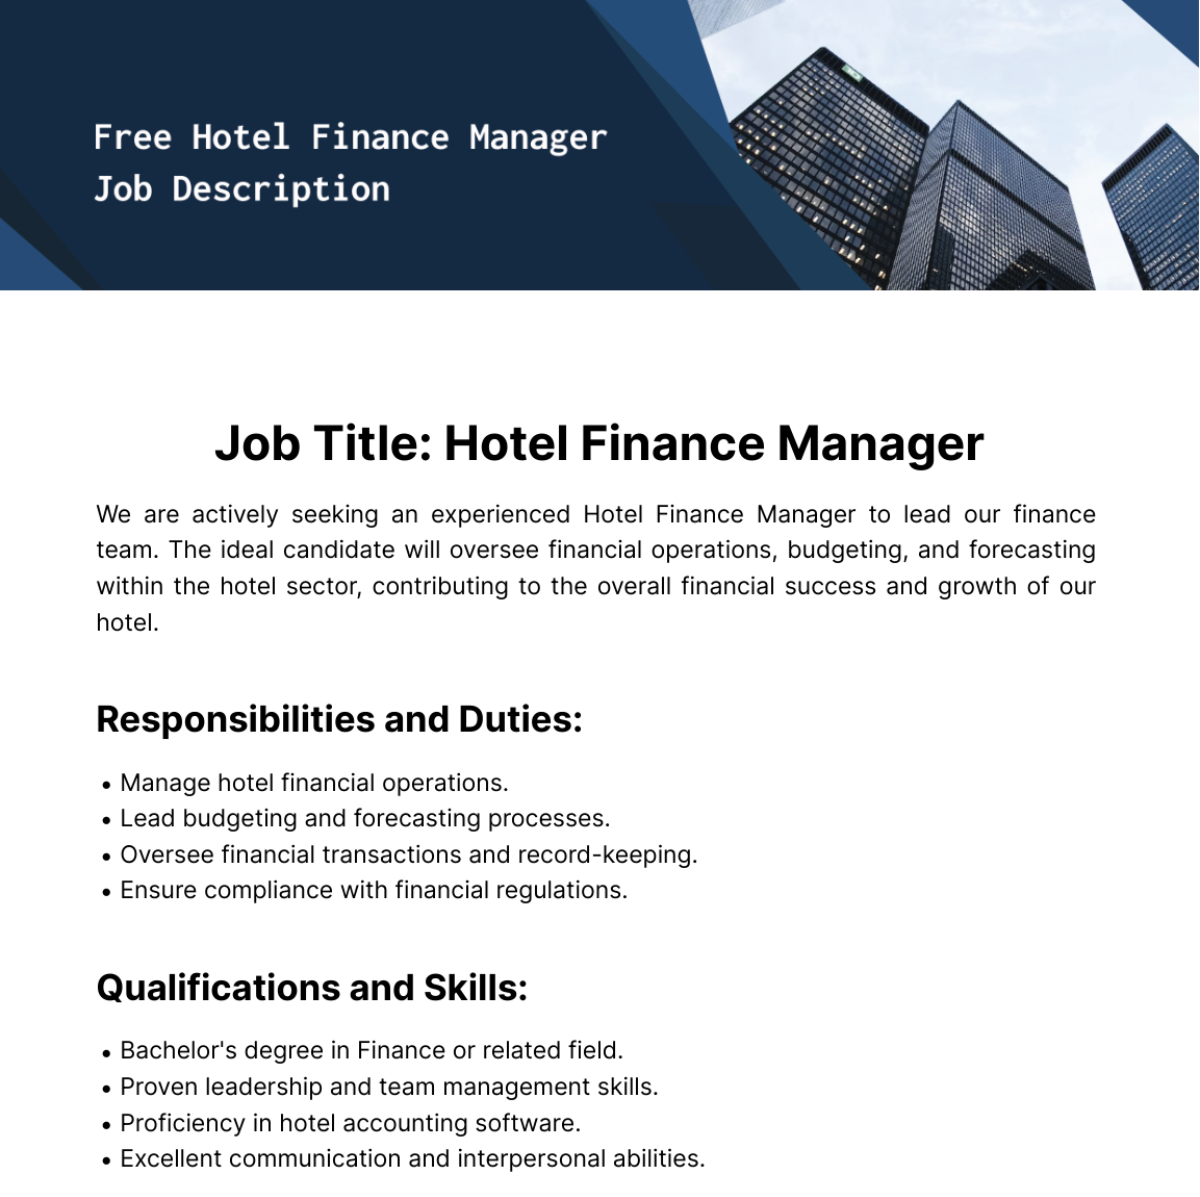 Free Hotel Finance Manager Job Description Template